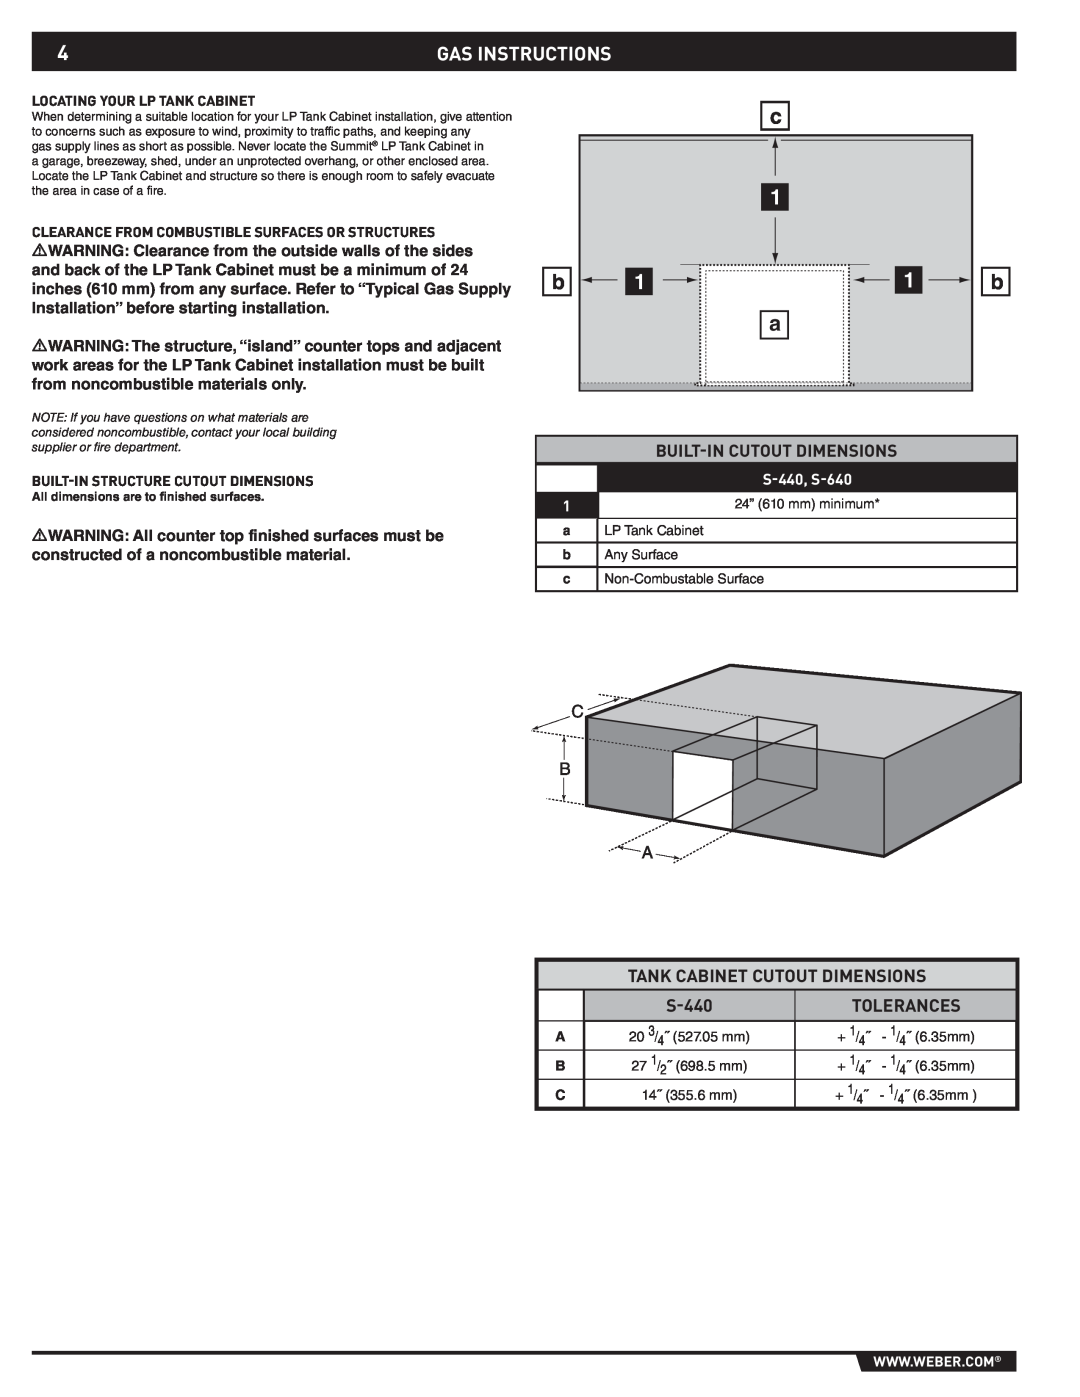 Weber 43176 Gas Instructions, Built-Incutout Dimensions, Tank Cabinet Cutout Dimensions, Tolerances, S-440, S-640 